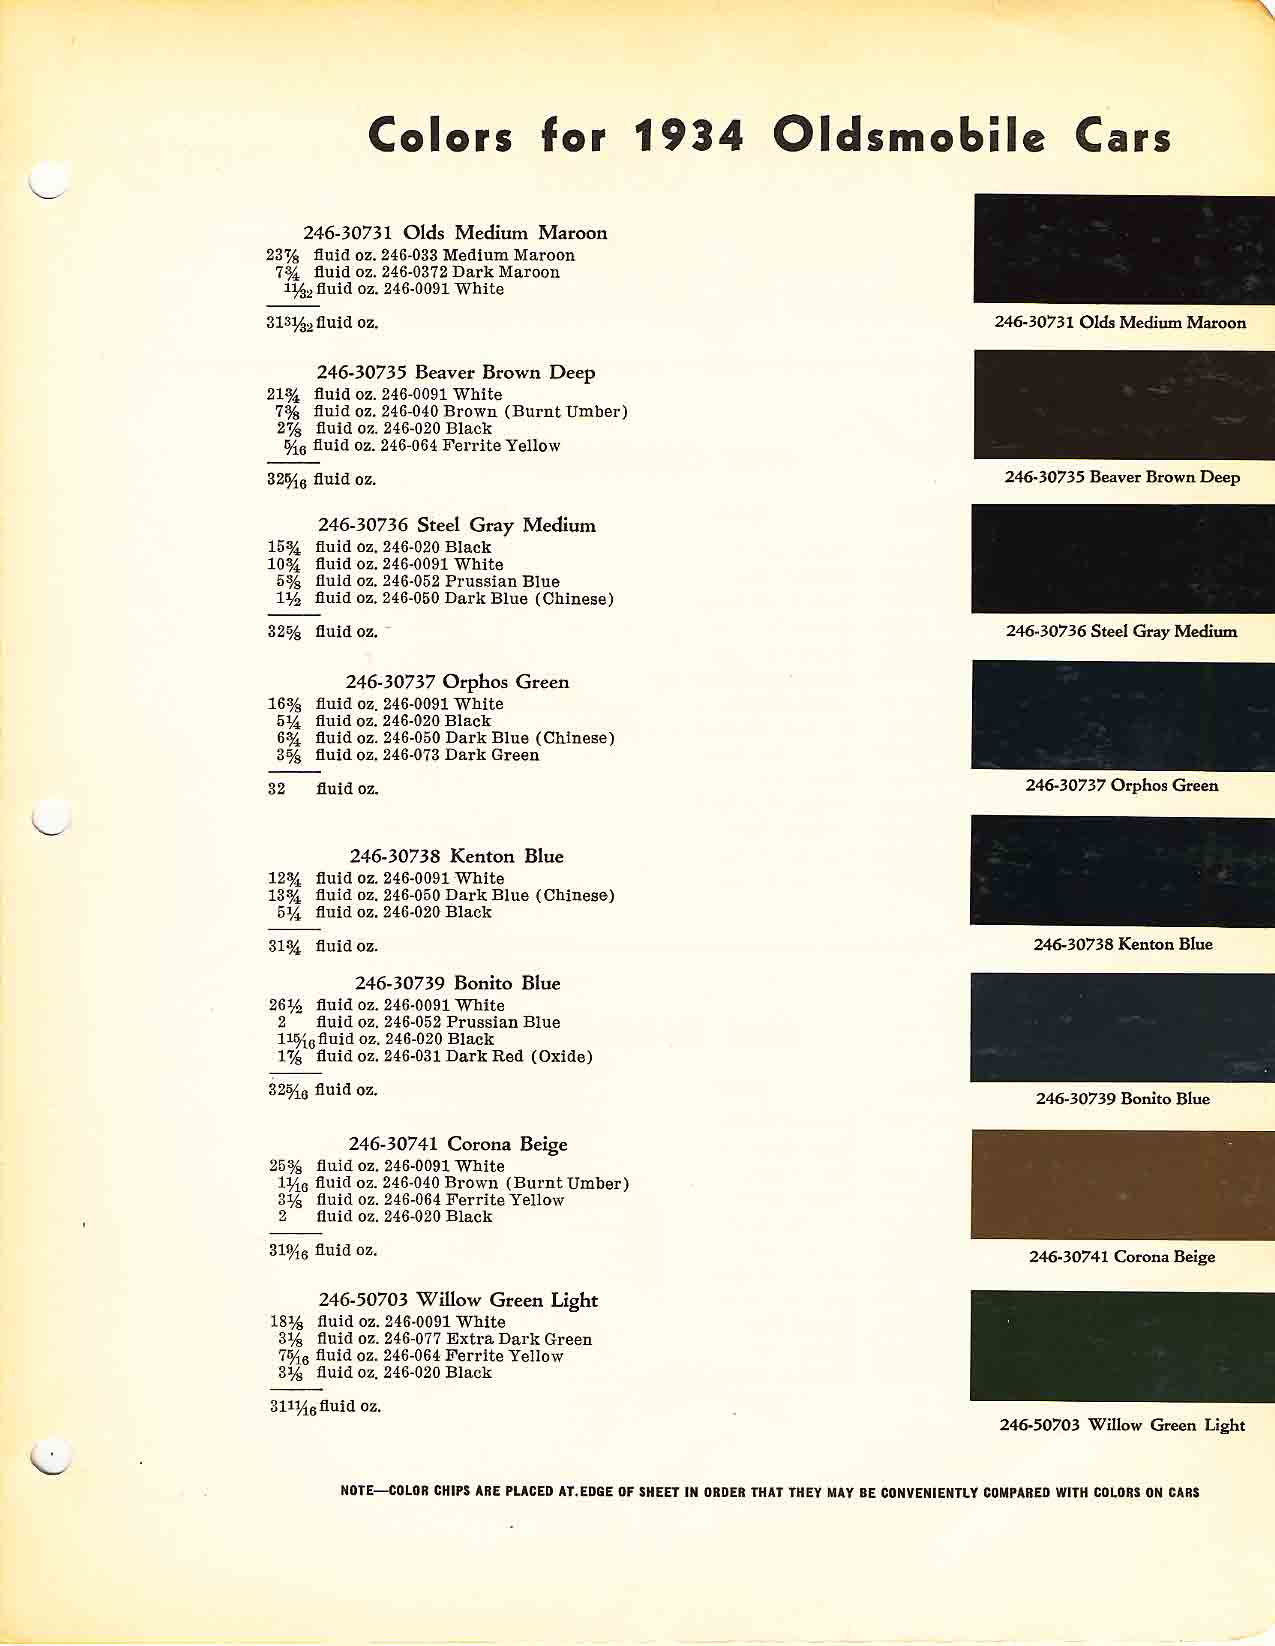 Oldsmobile Paint & Color Code Chart